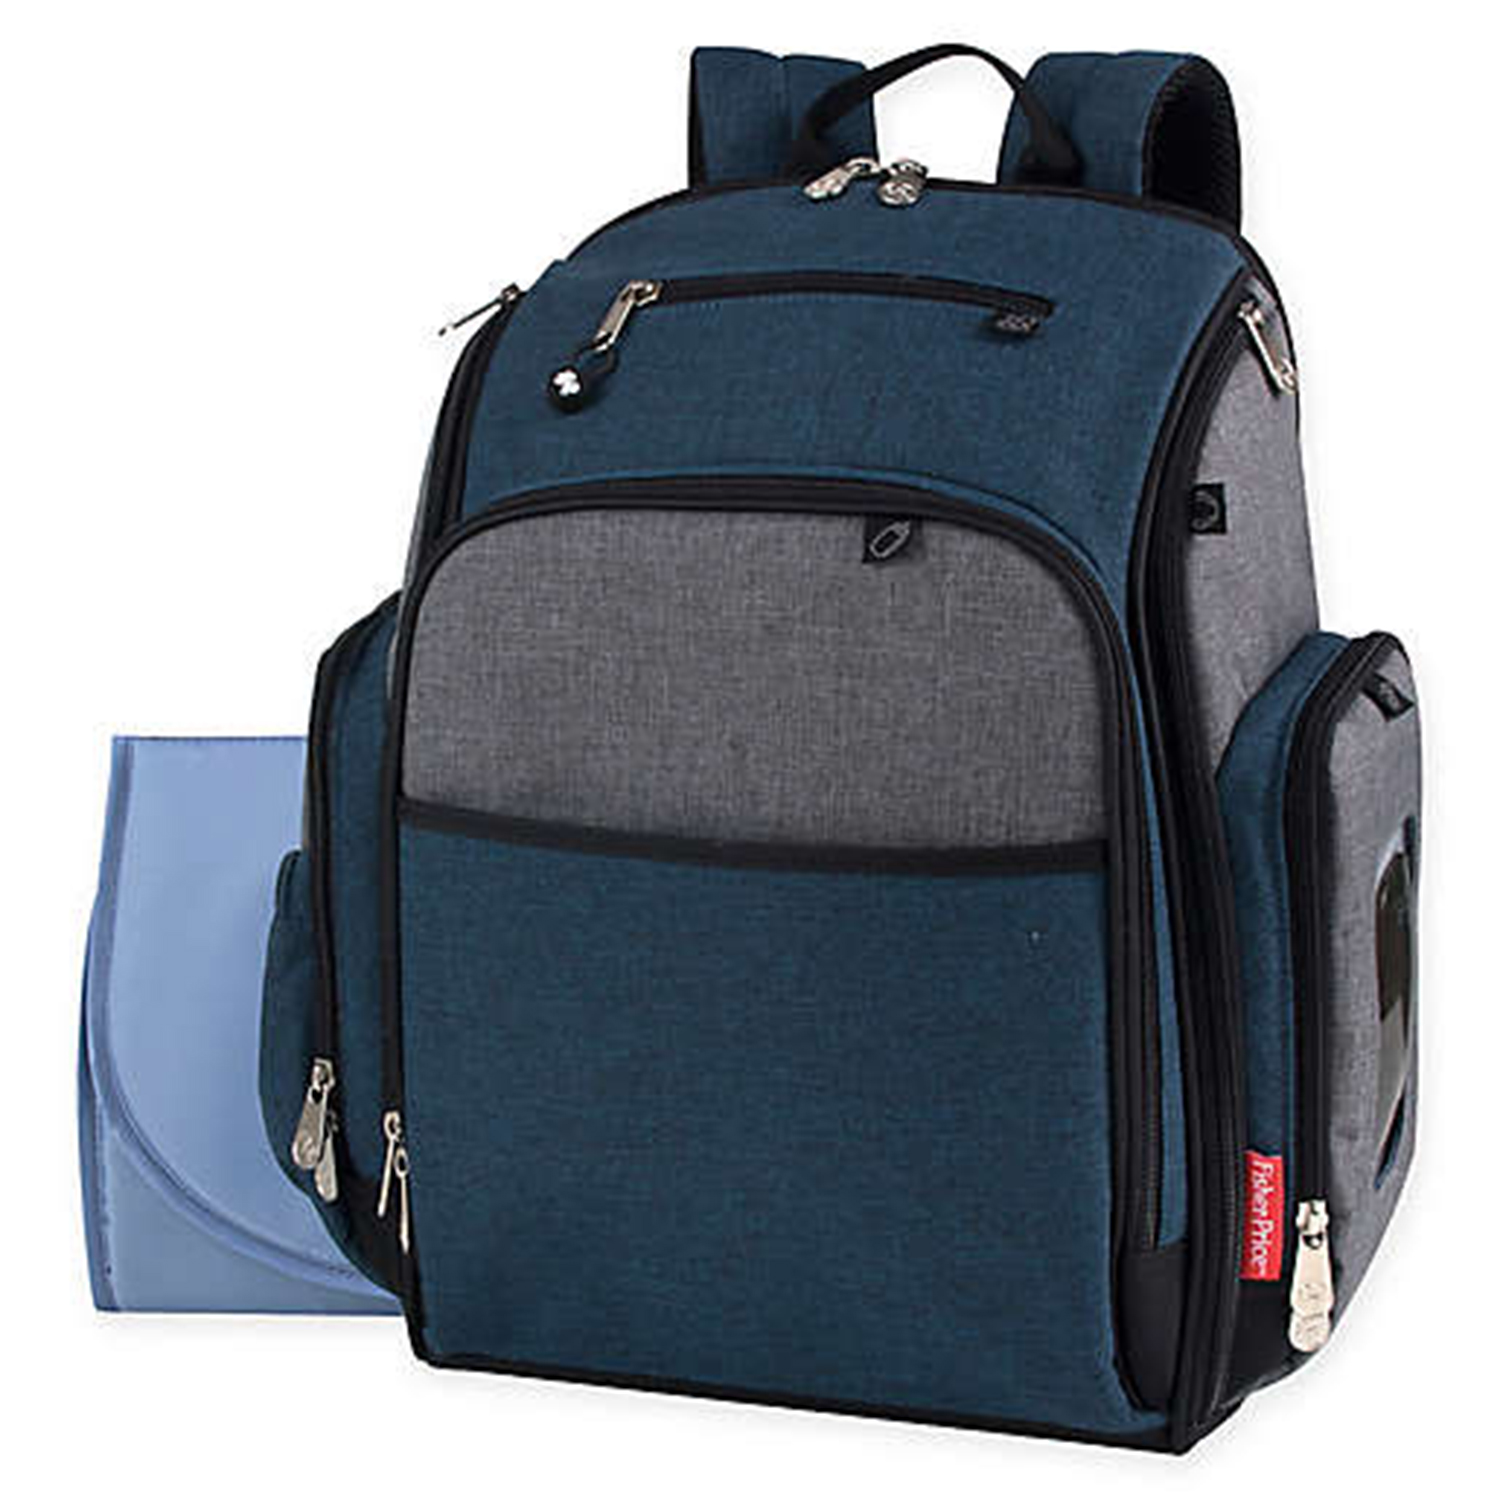 Fisher-Price Kaden Super Cooler Insulated Backpack Diaper Bag 